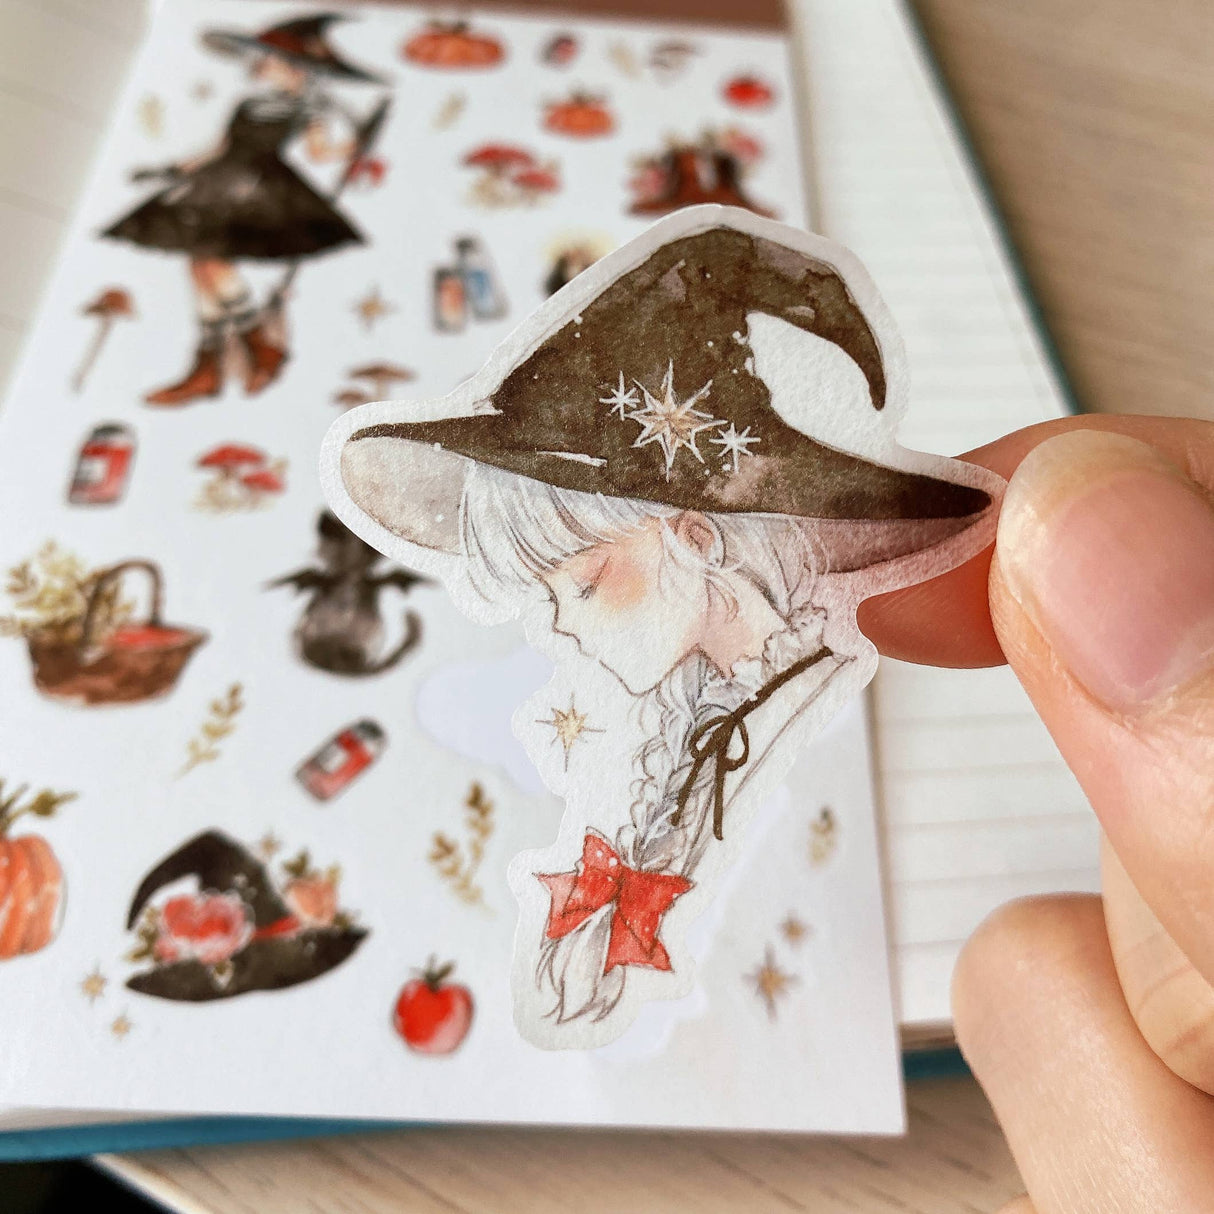 Autumn's Witch Washi Stickers by Cherry Rabbit